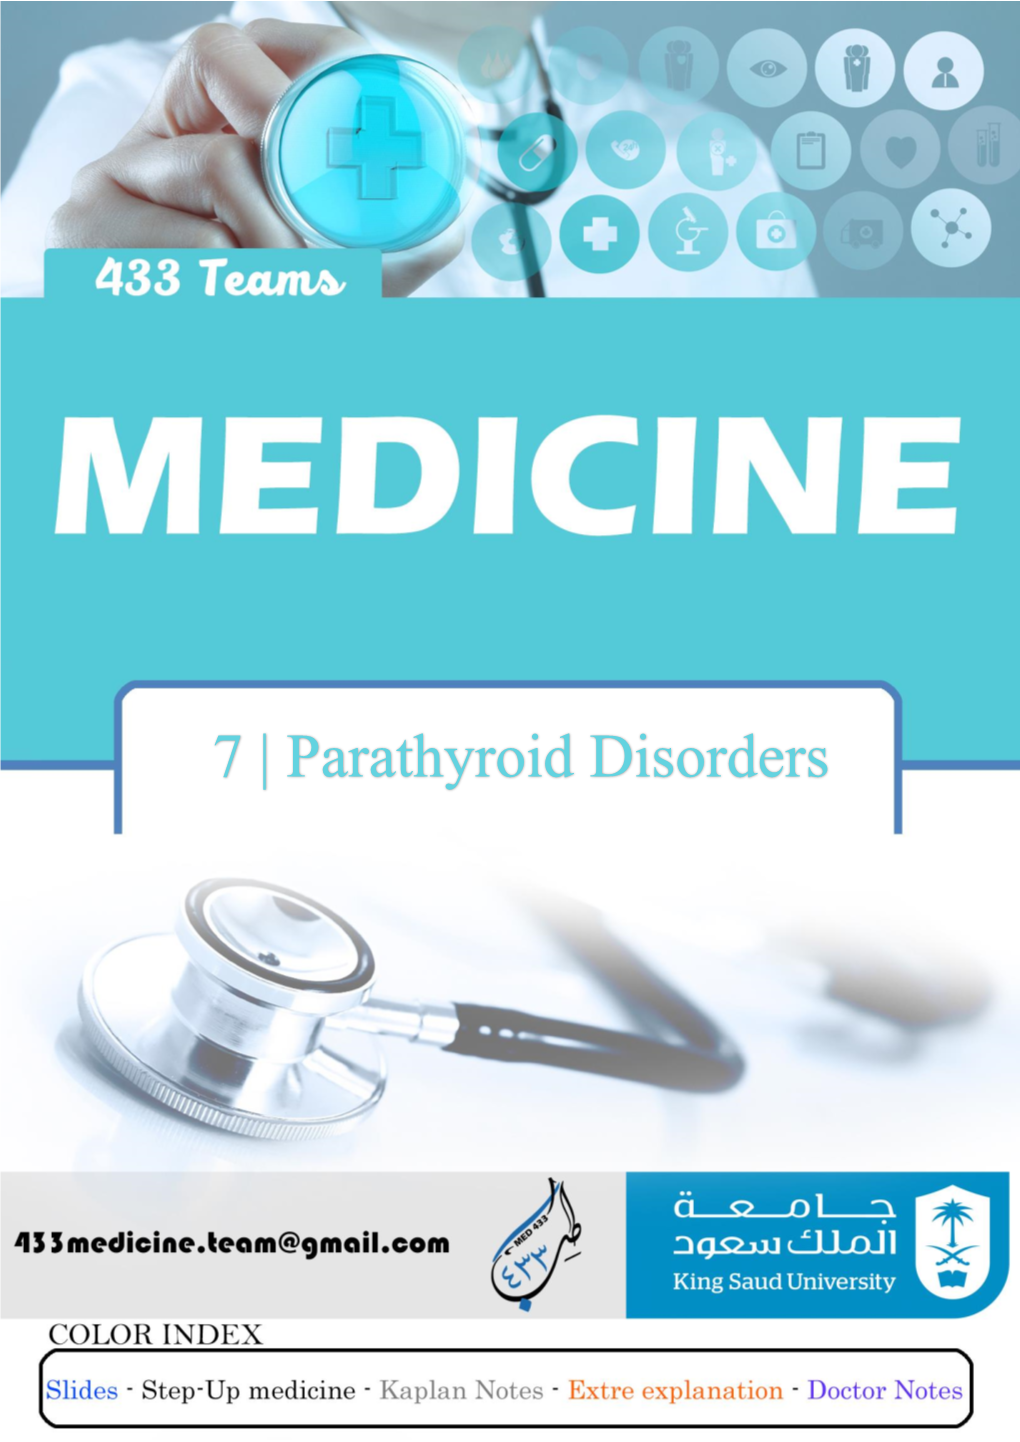 7 | Parathyroid Disorders